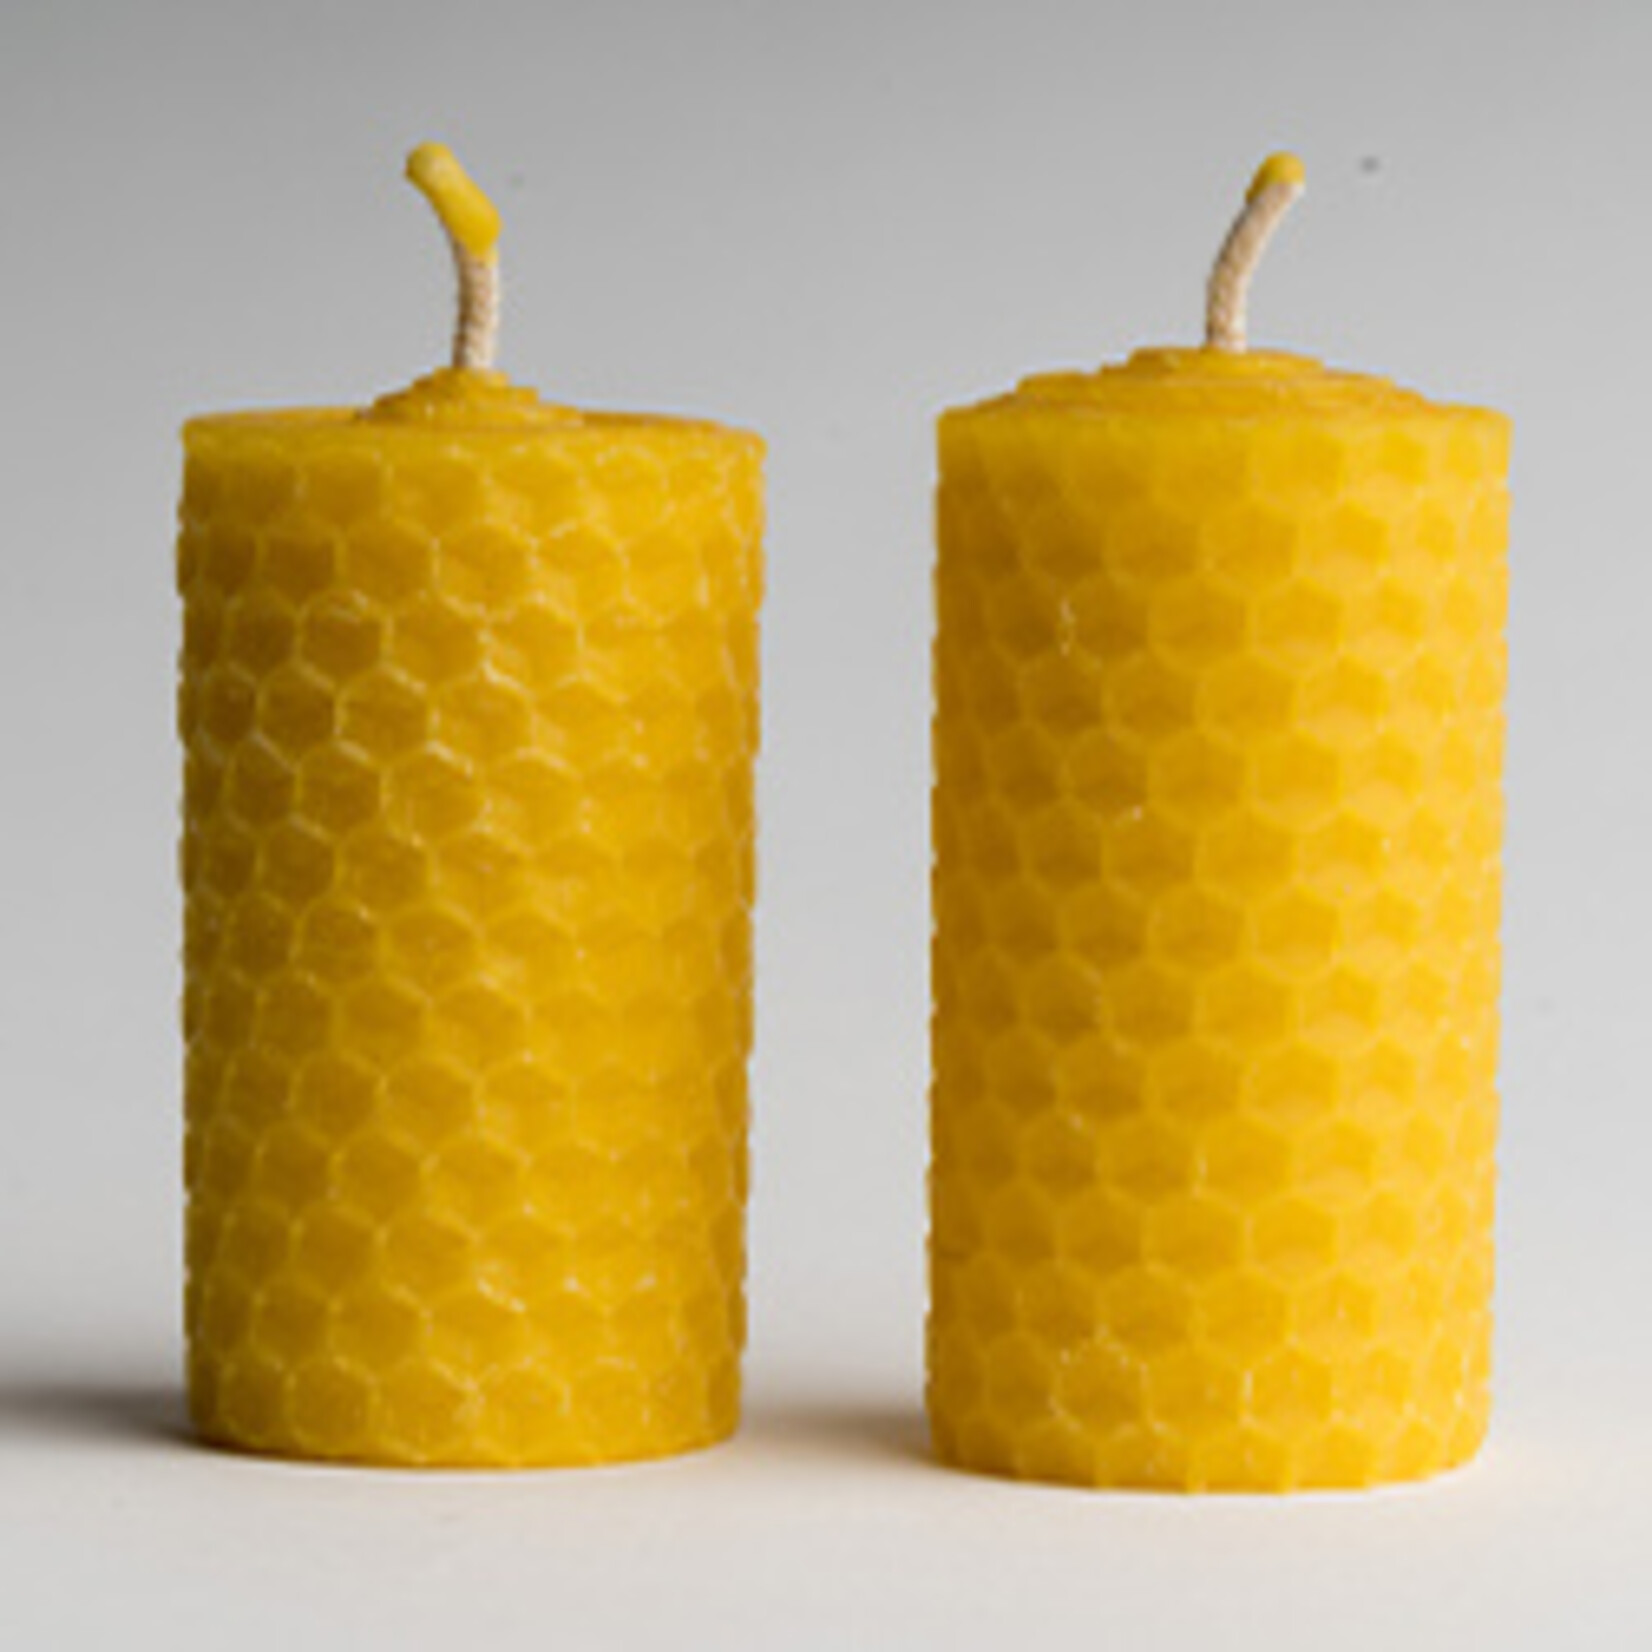 Trish's Honey Products Sensitive Skin Care Gift Box